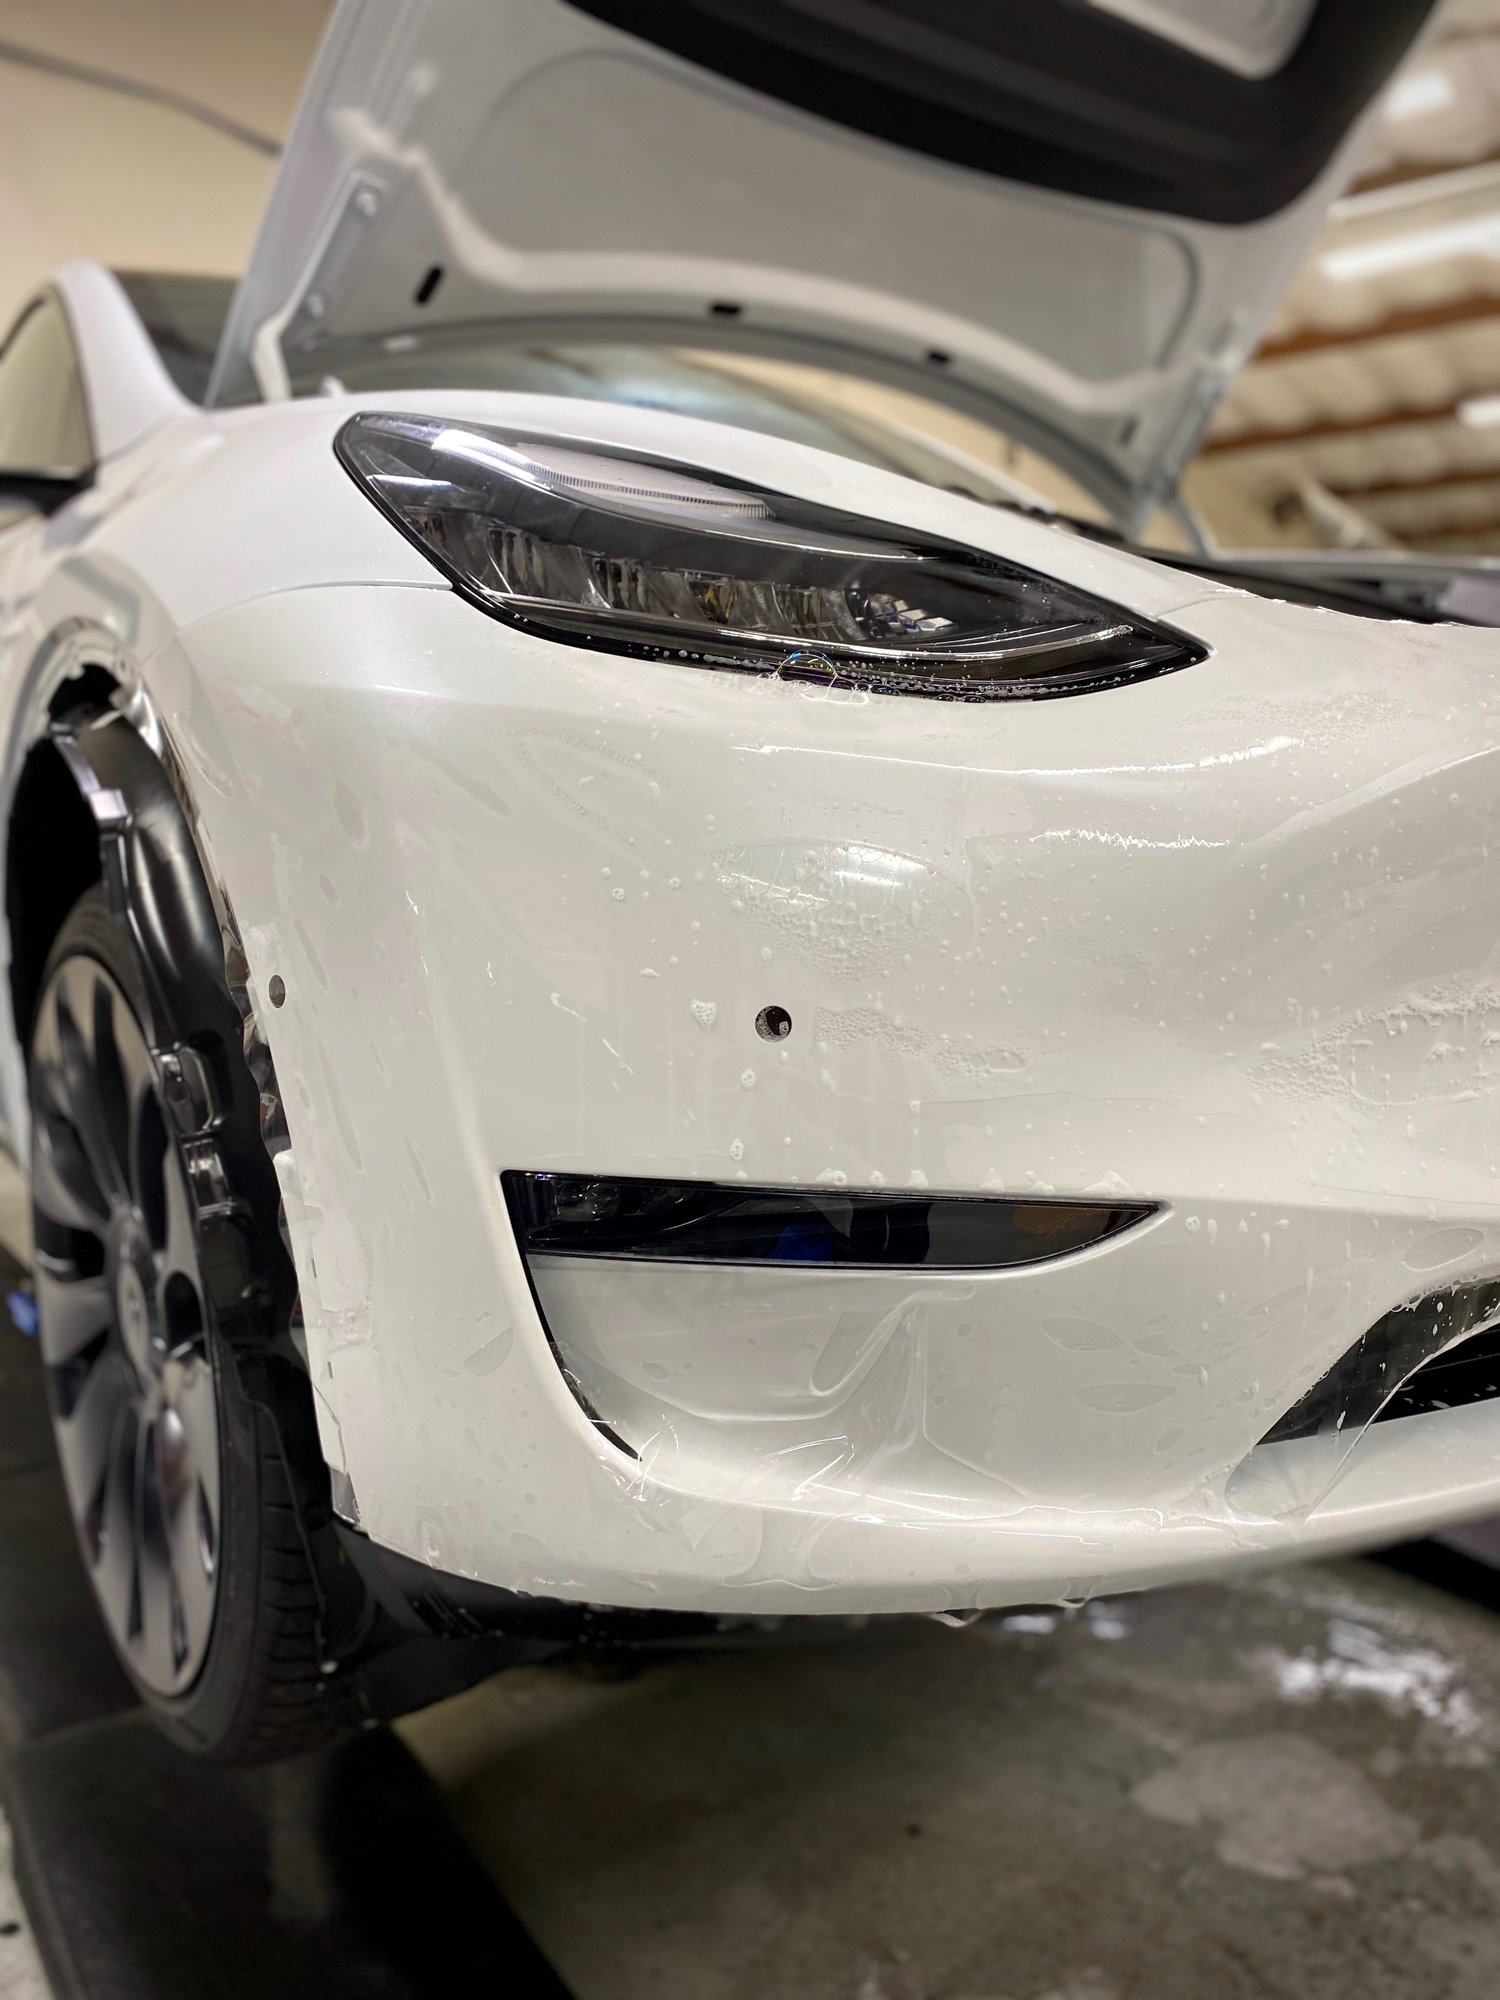 2020 Tesla Model Y Pearl White Multi-Coat  (Appearance Solutions-Sacramento,CA)~15.JPG